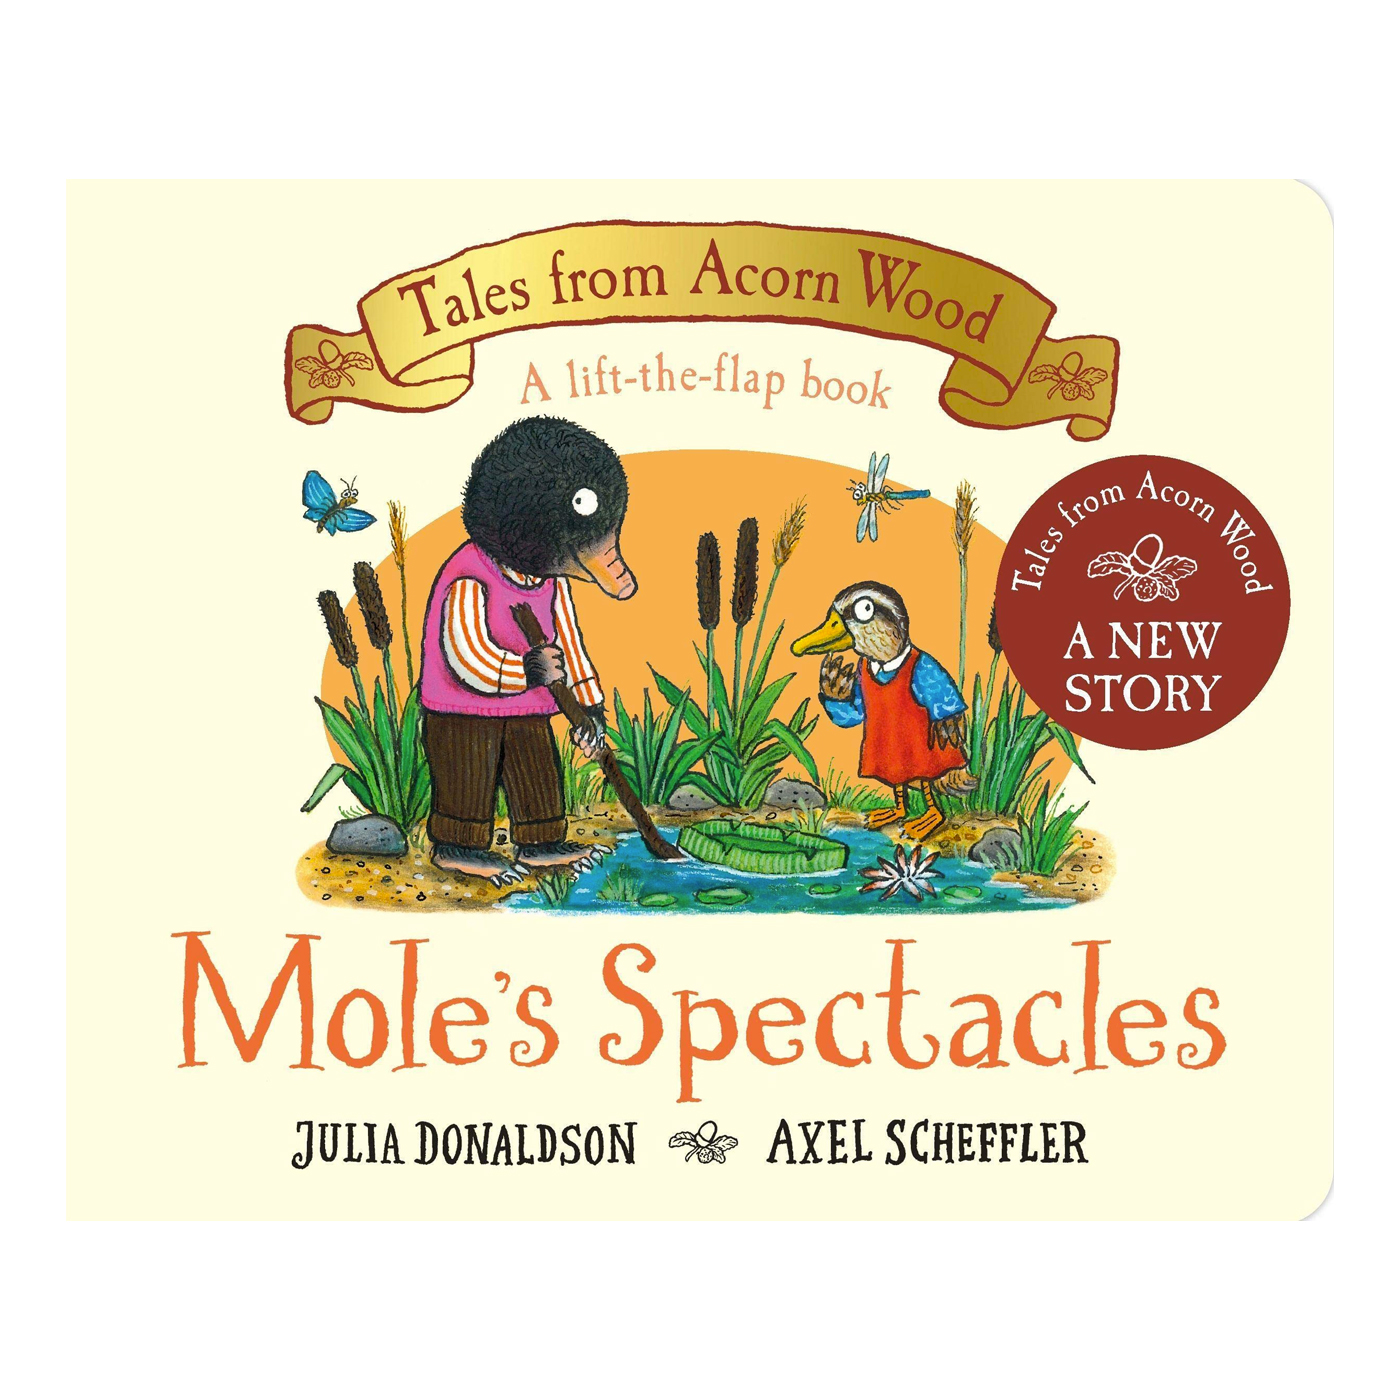  Mole's Spectacles